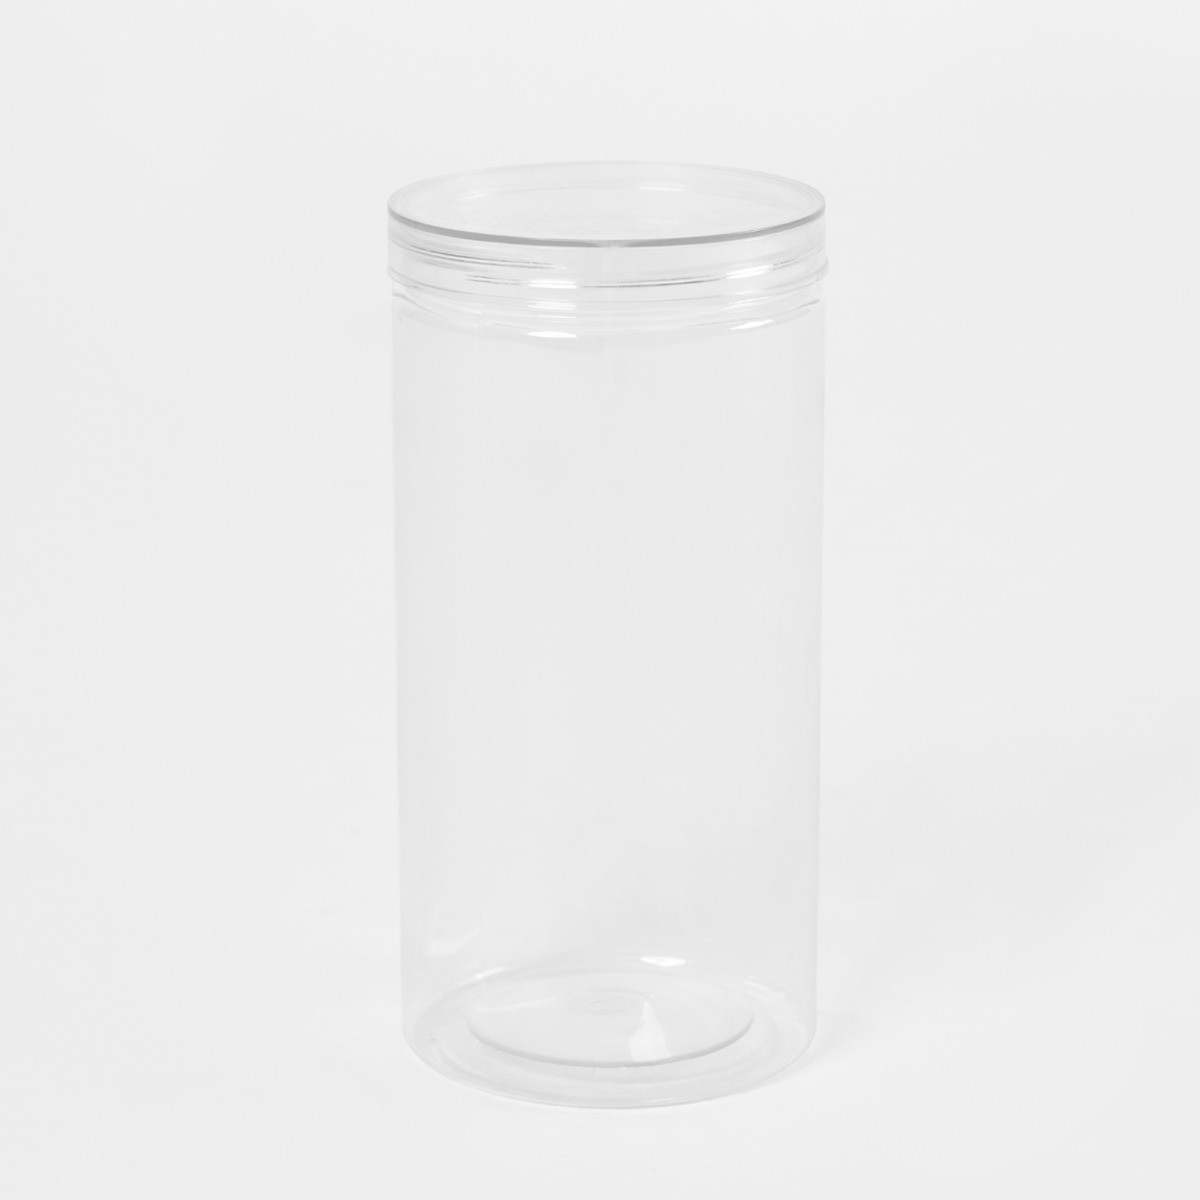 OHS Large Round Plastic Food Storage Jar - Clear>